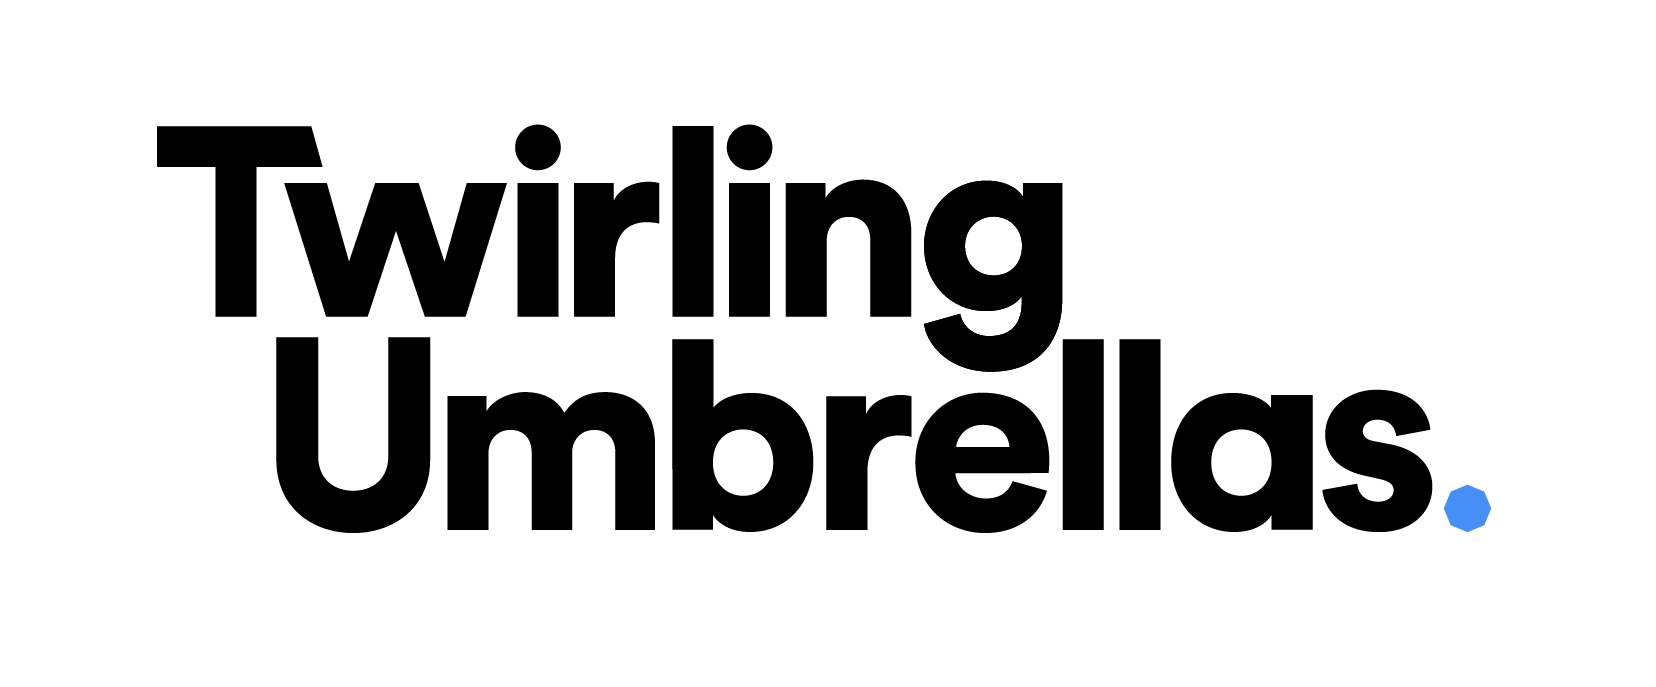 Winner Image - Twirling Umbrellas